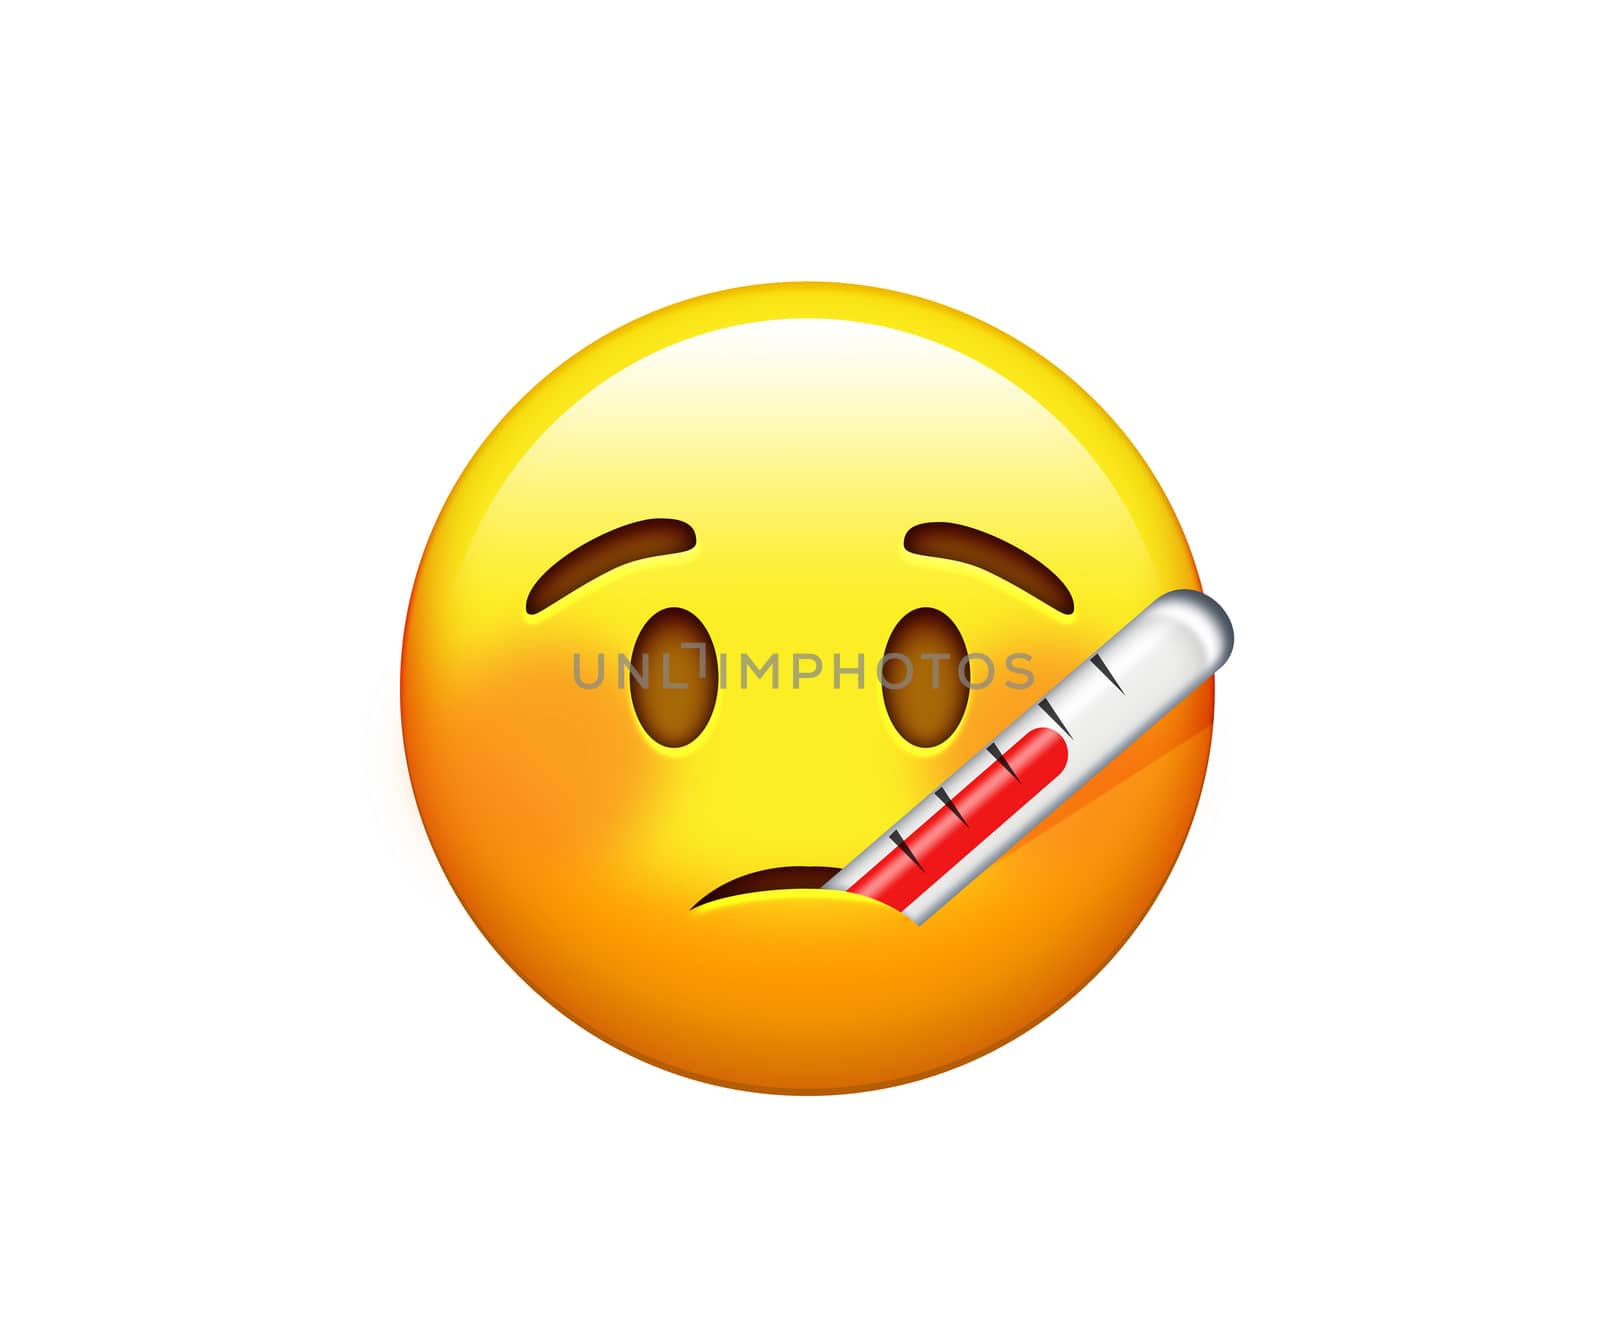 Emoji ill yellow sad face with heat probe icon by cougarsan